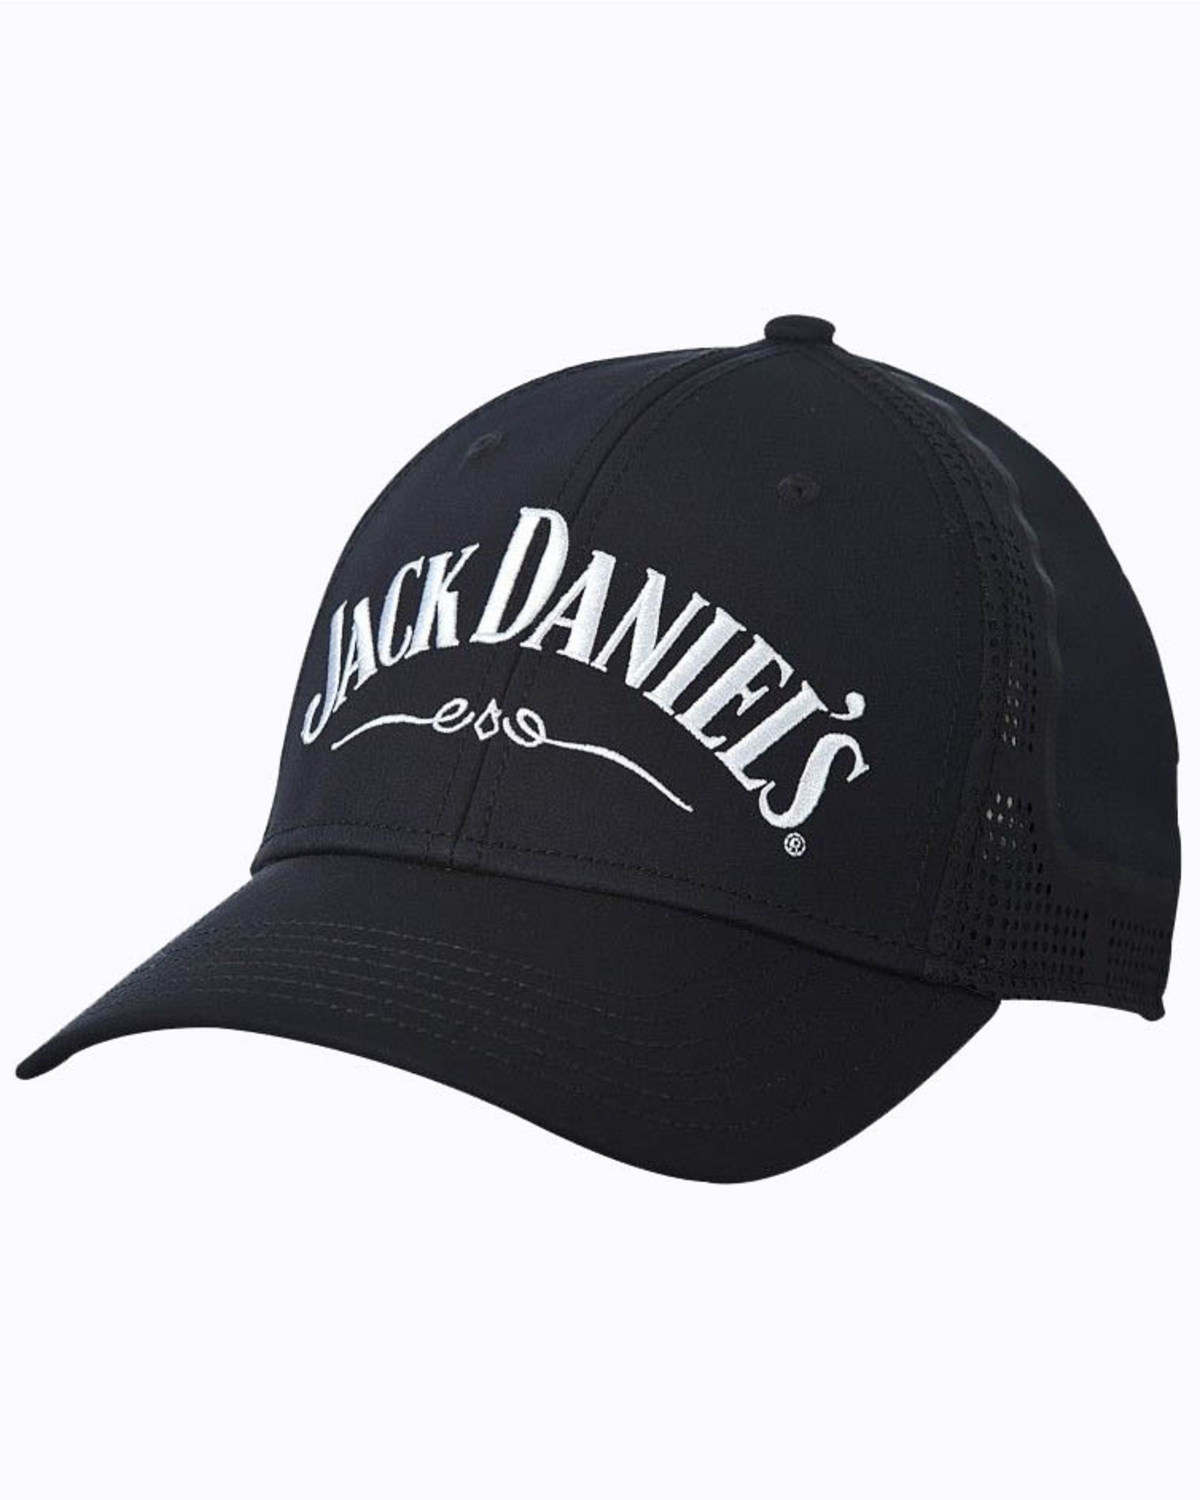 Jack Daniels Men's Performance Mesh Ball Cap